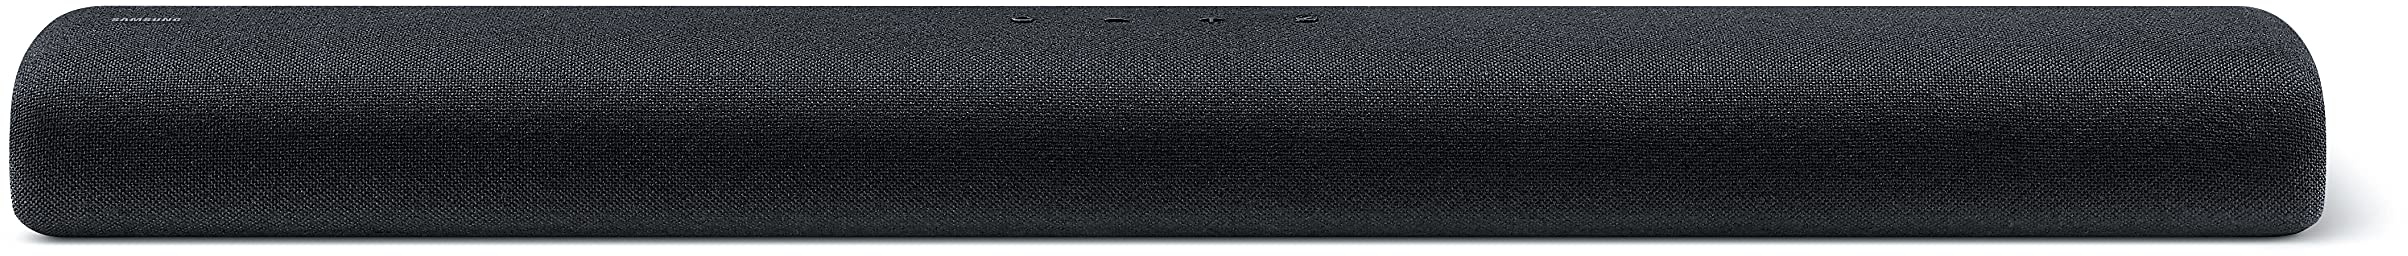 Samsung 5.0.-Kanal Soundbar HW-S60A/ZG mit Acoustic-Beam-Technologie, Dolby Digital Plus, DTS Digital 5.1 [2021], Graphitschwarz